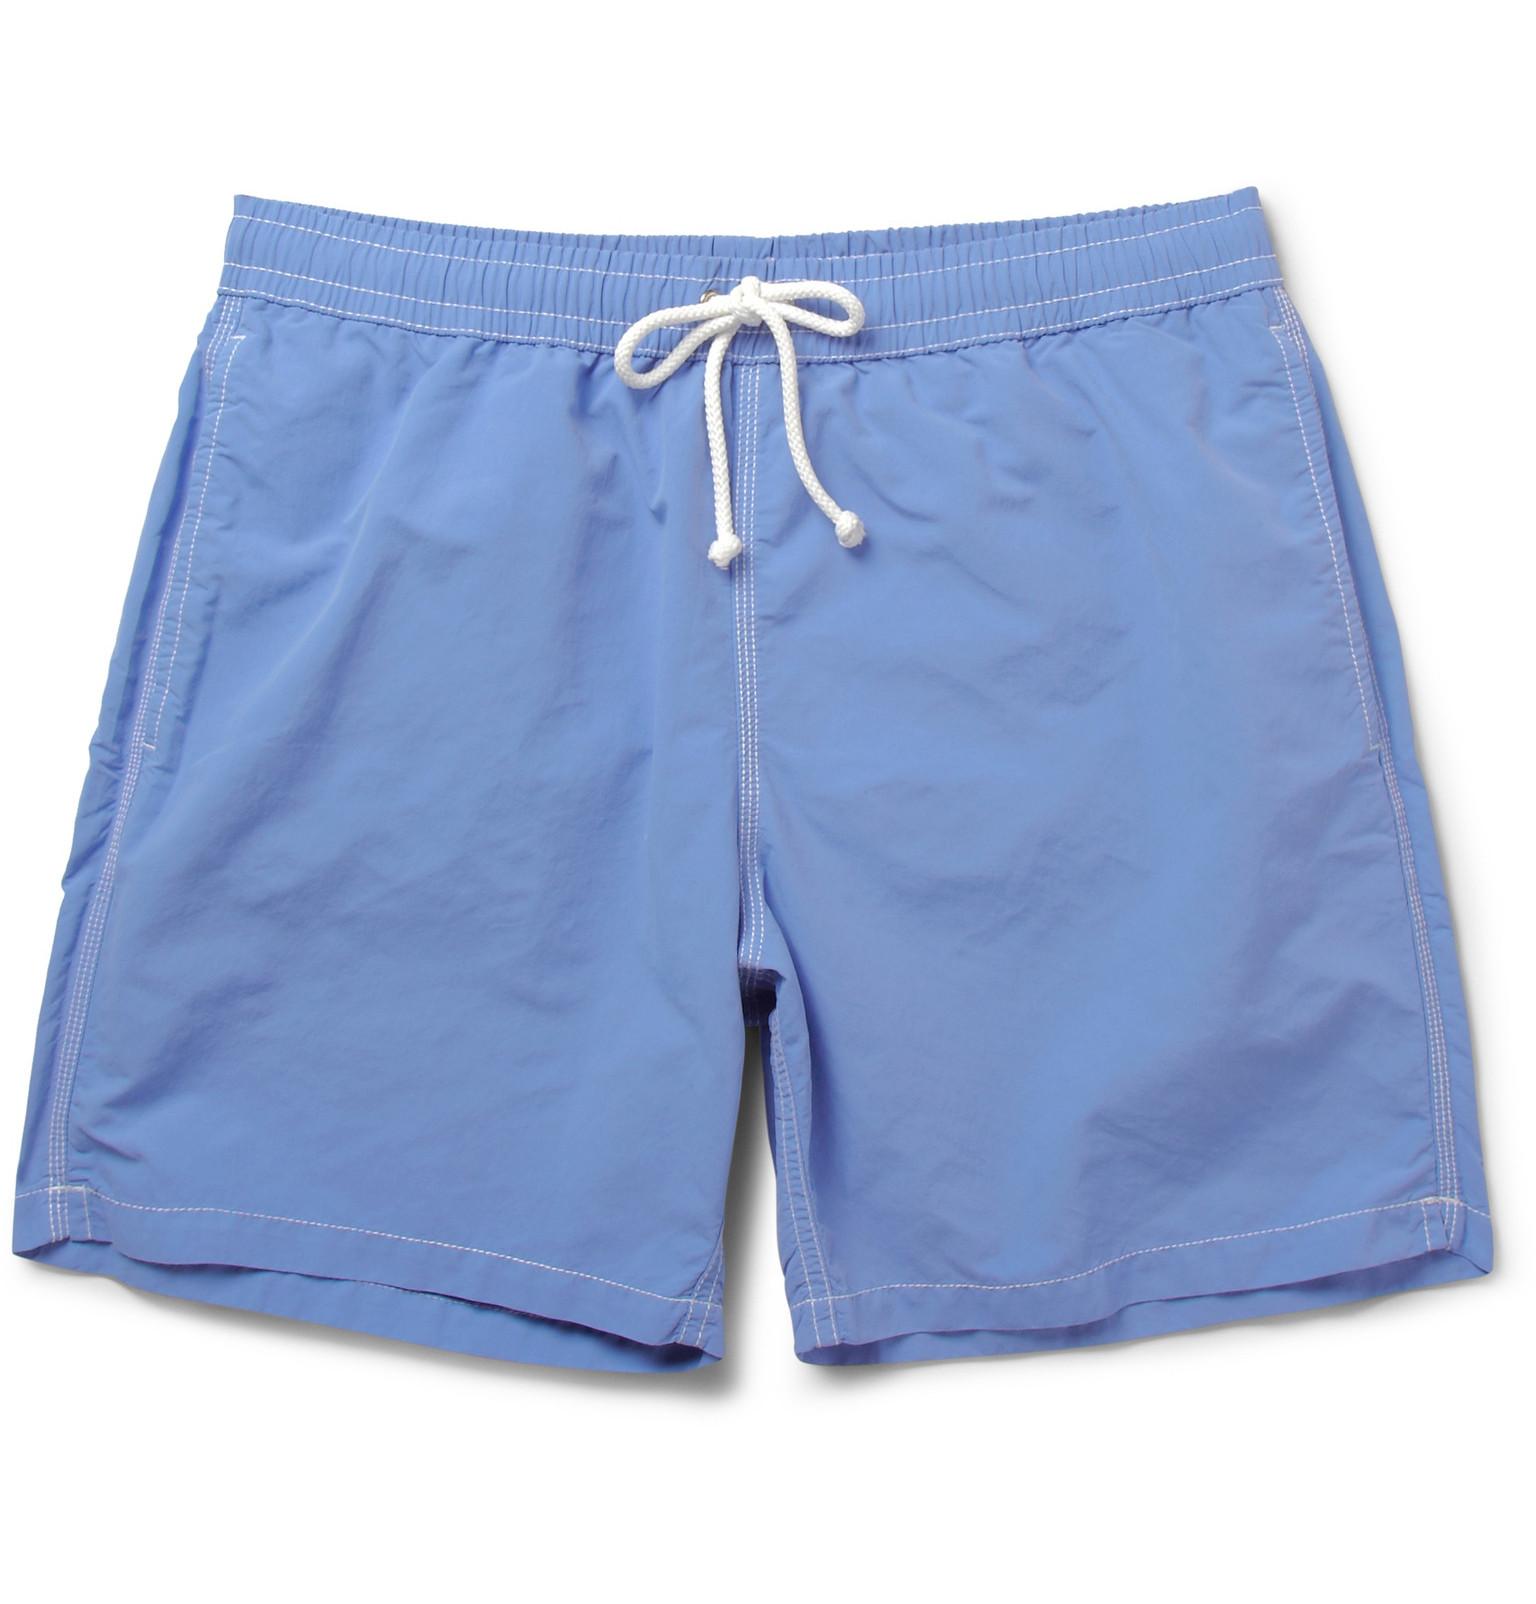 Hartford Mid-length Swim Shorts in Blue for Men - Lyst